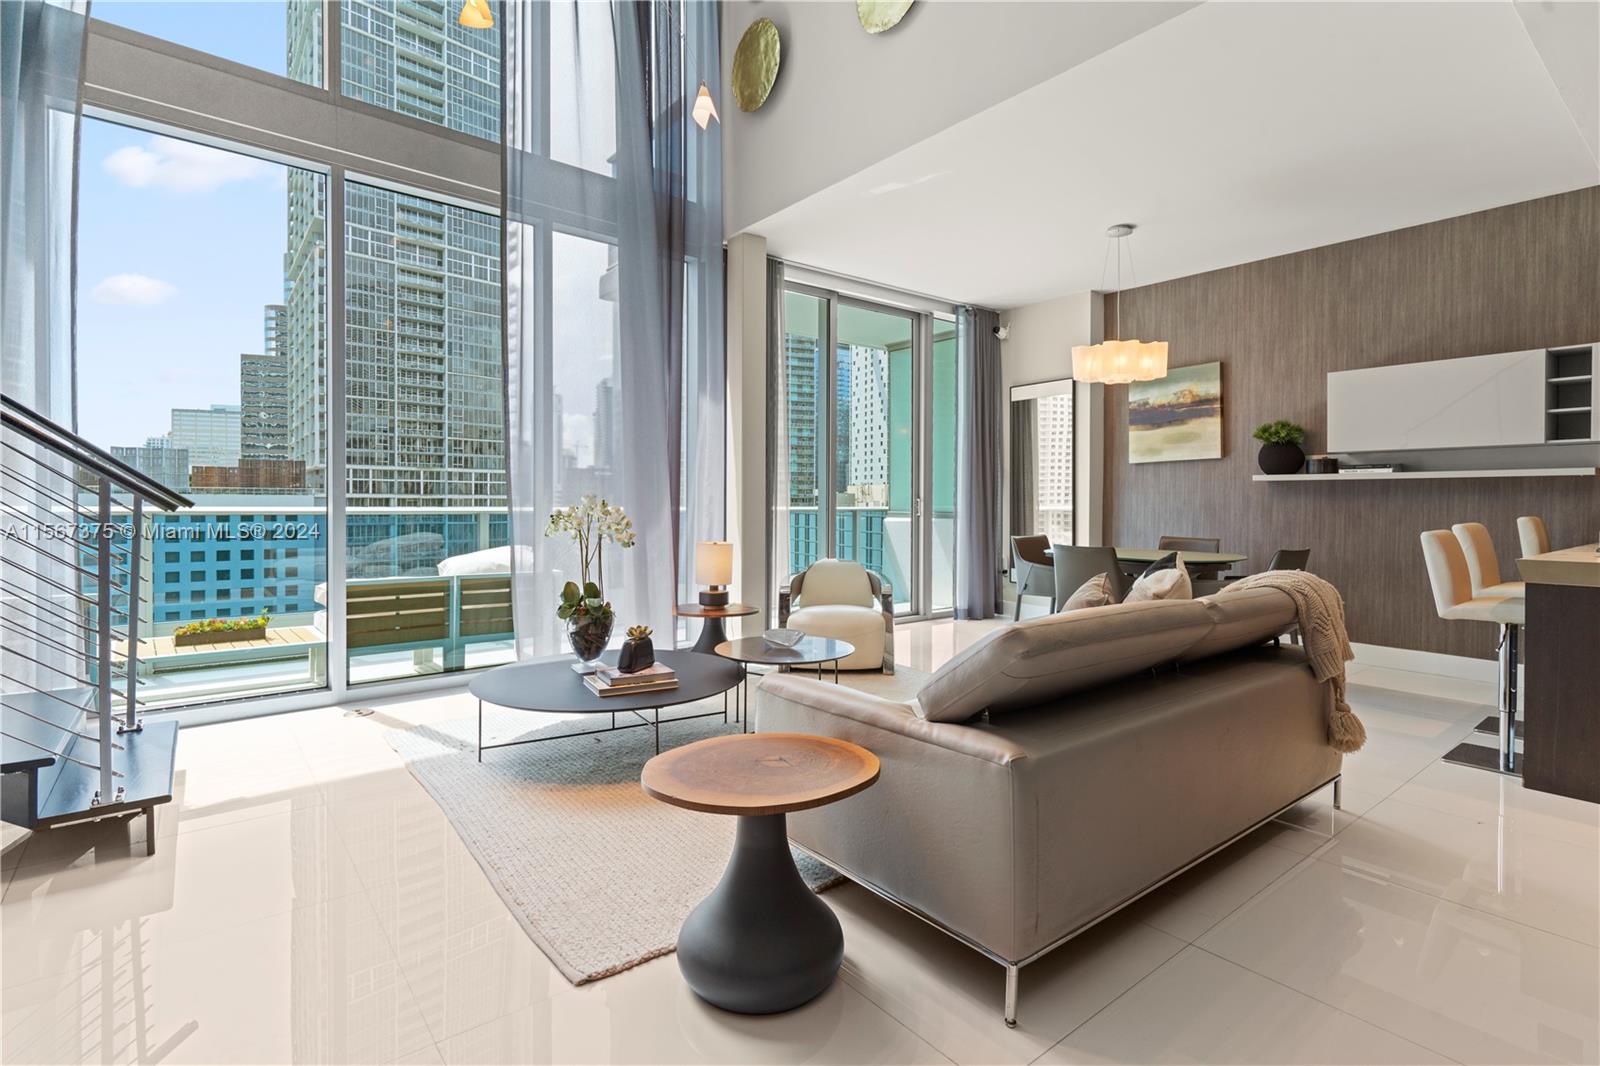 Property for Sale at 200 Biscayne Boulevard Way 1407, Miami, Broward County, Florida - Bedrooms: 2 
Bathrooms: 3  - $1,275,000